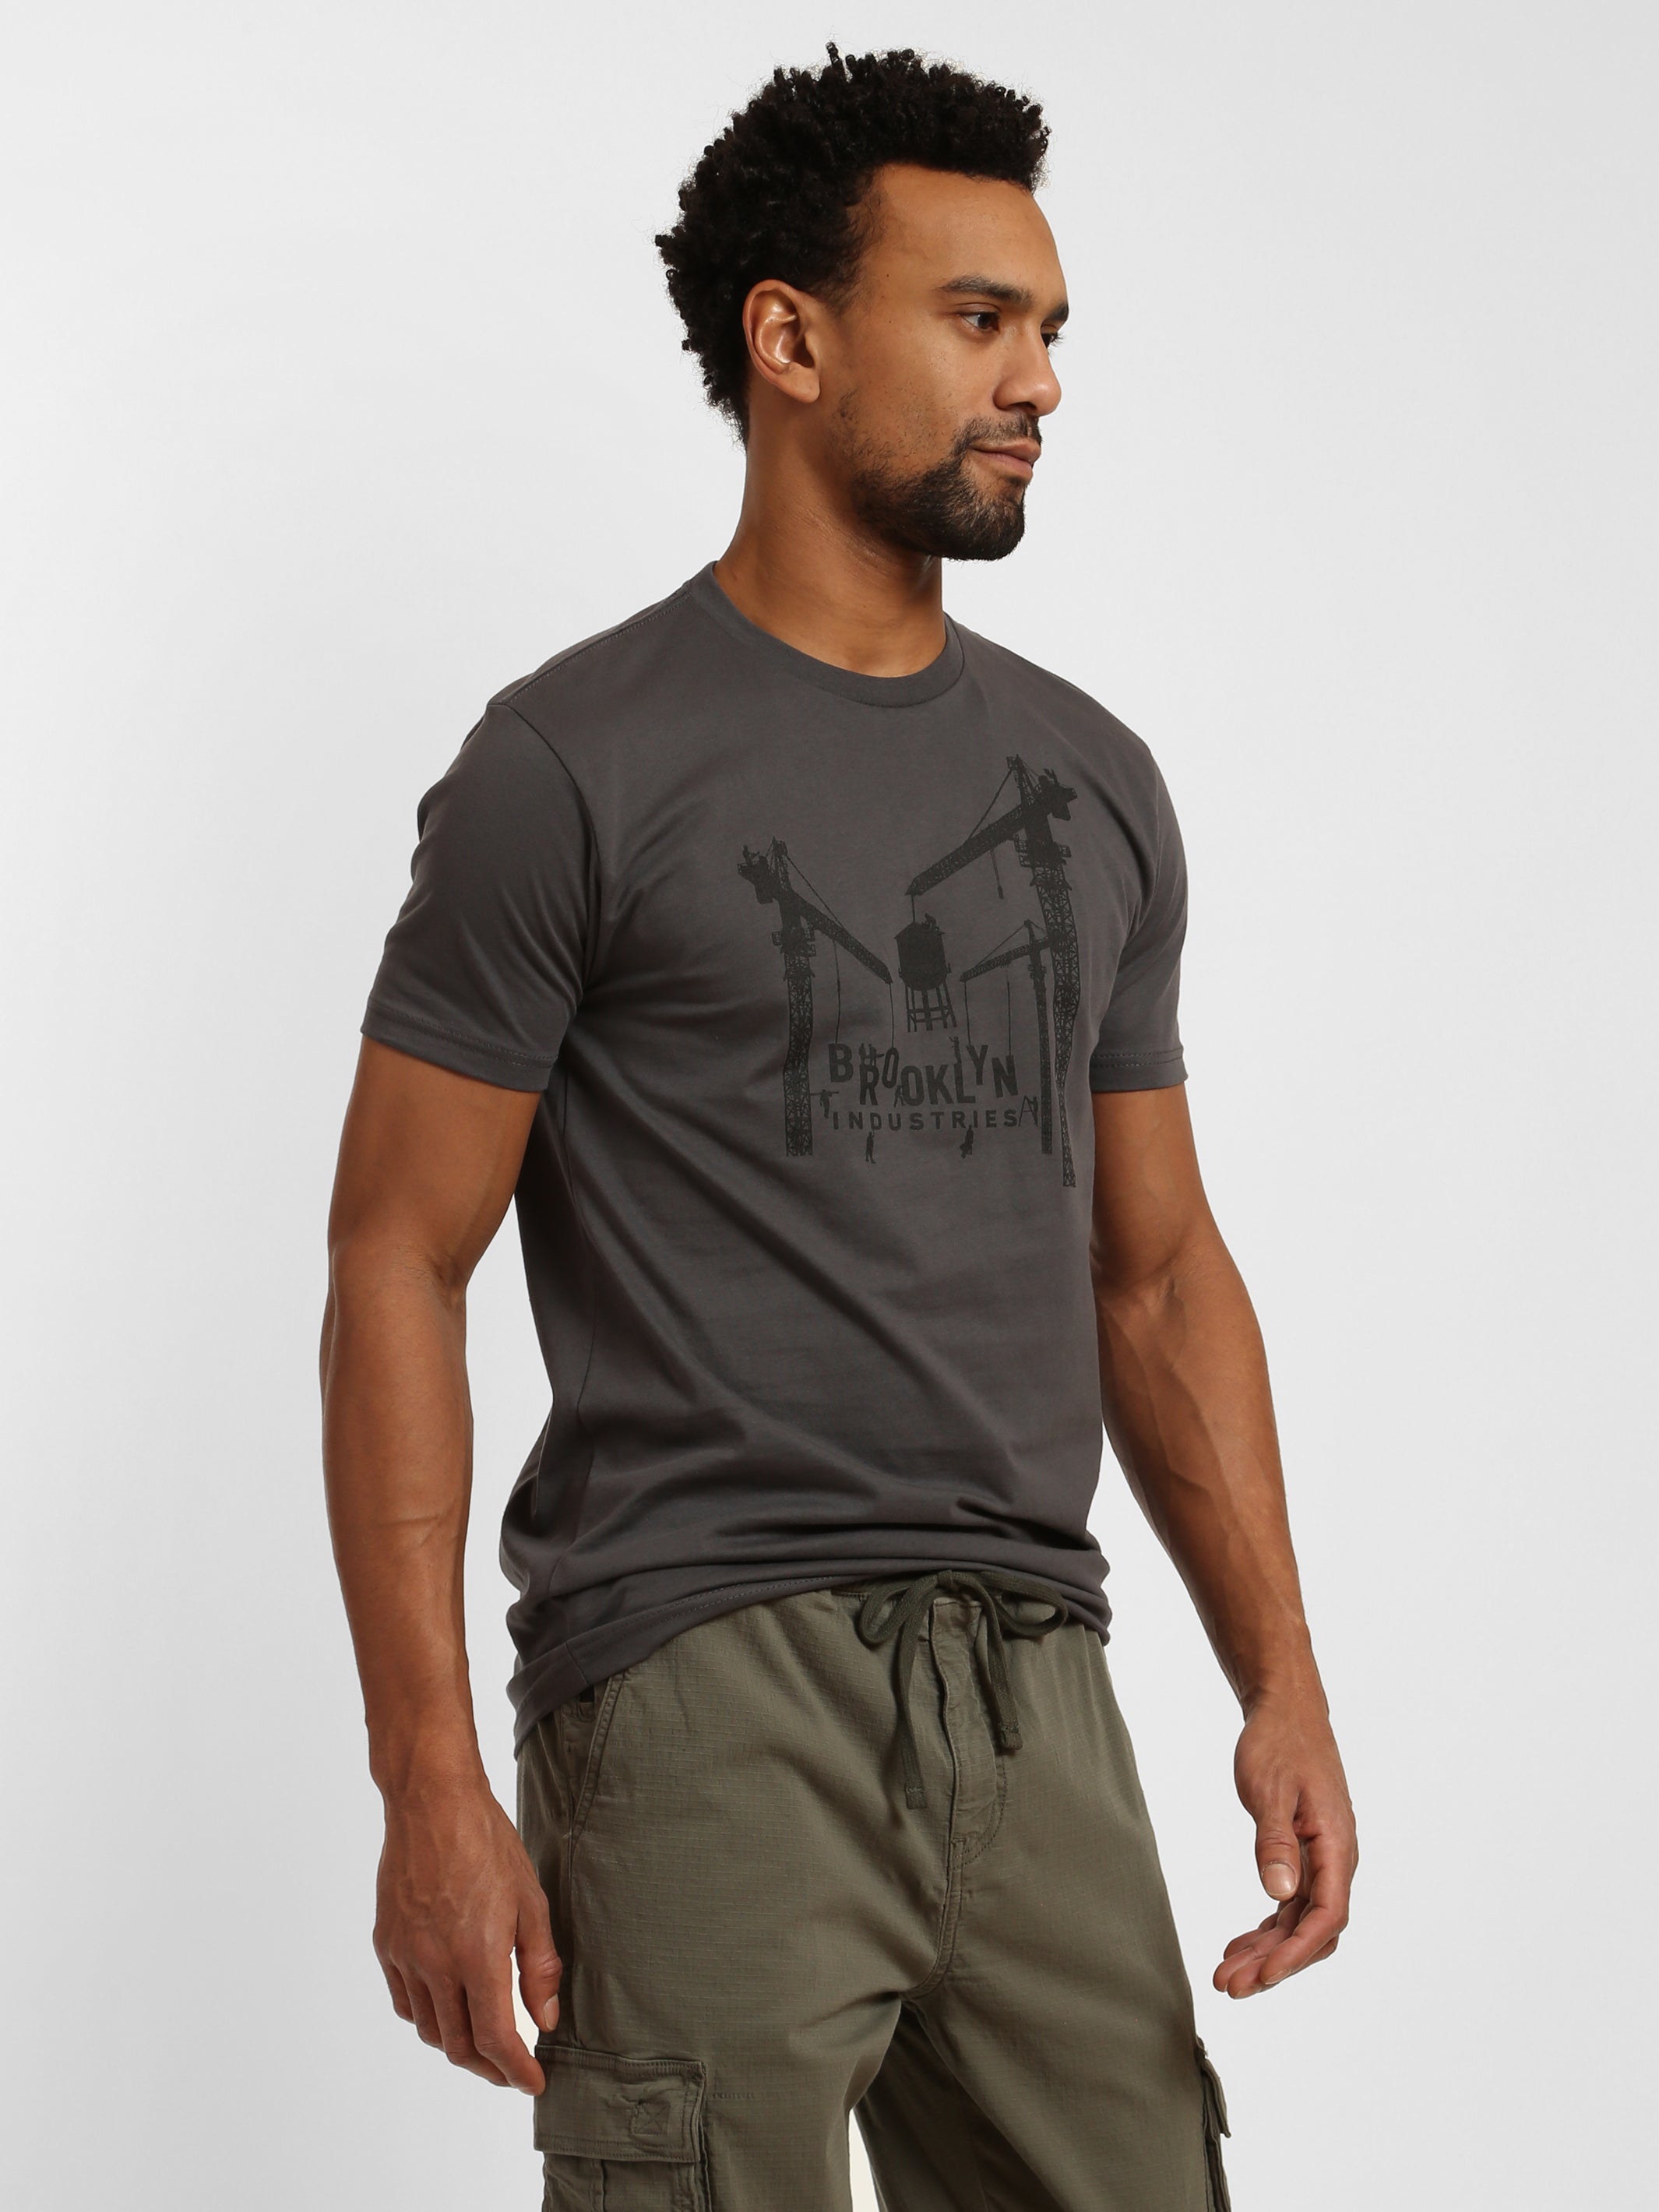 Men's Brooklyn Cranes T-Shirt - BROOKLYN INDUSTRIES